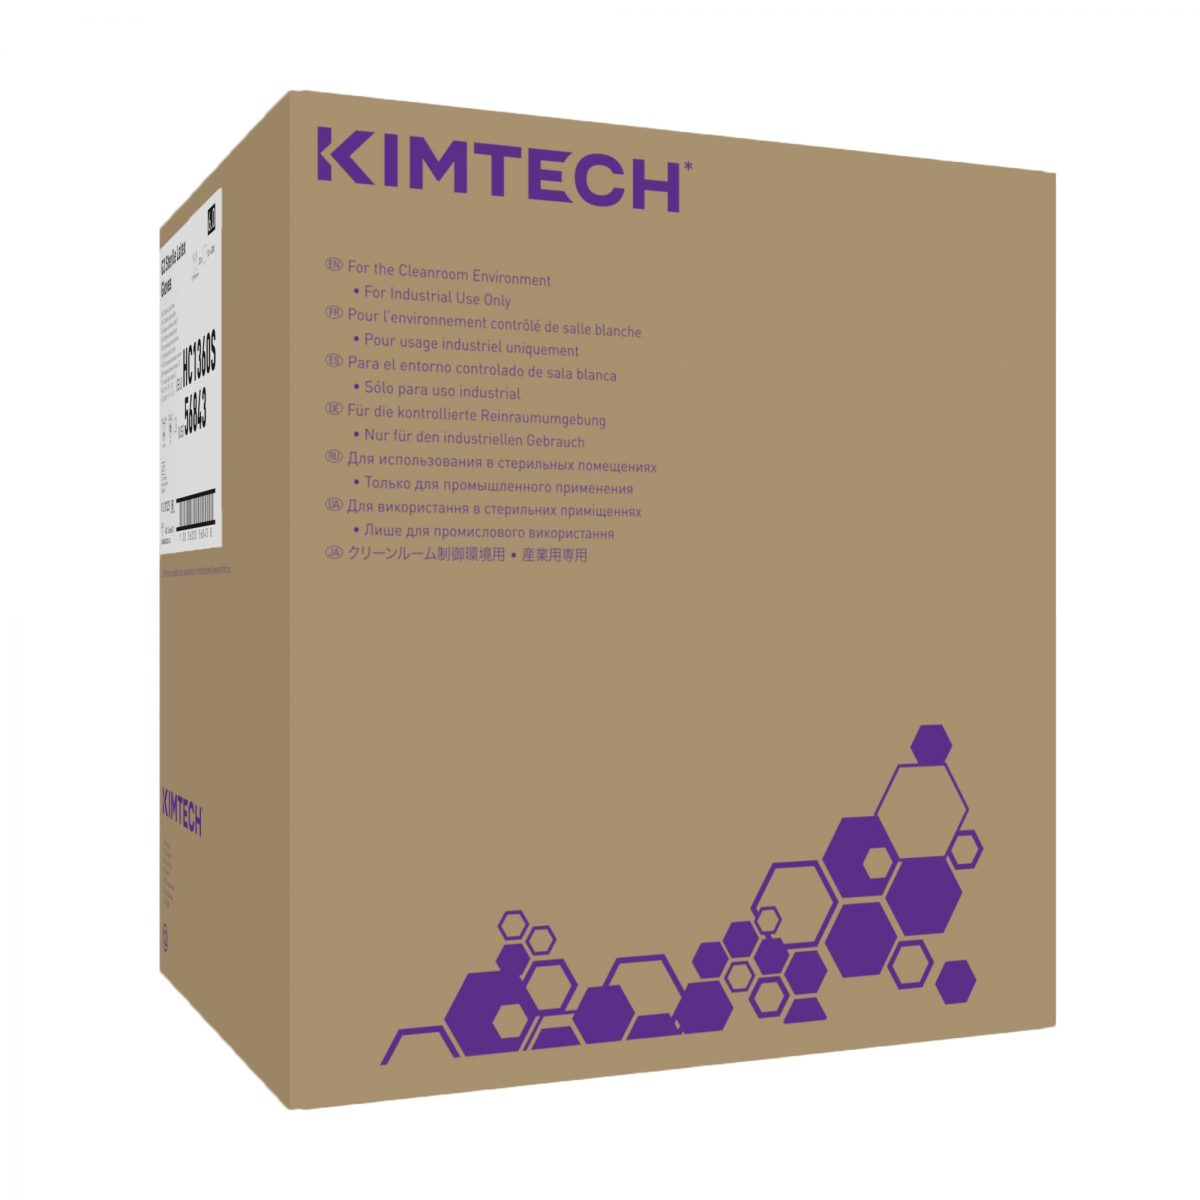 kimtech pure g3 sterile latex gloves box - Integrity